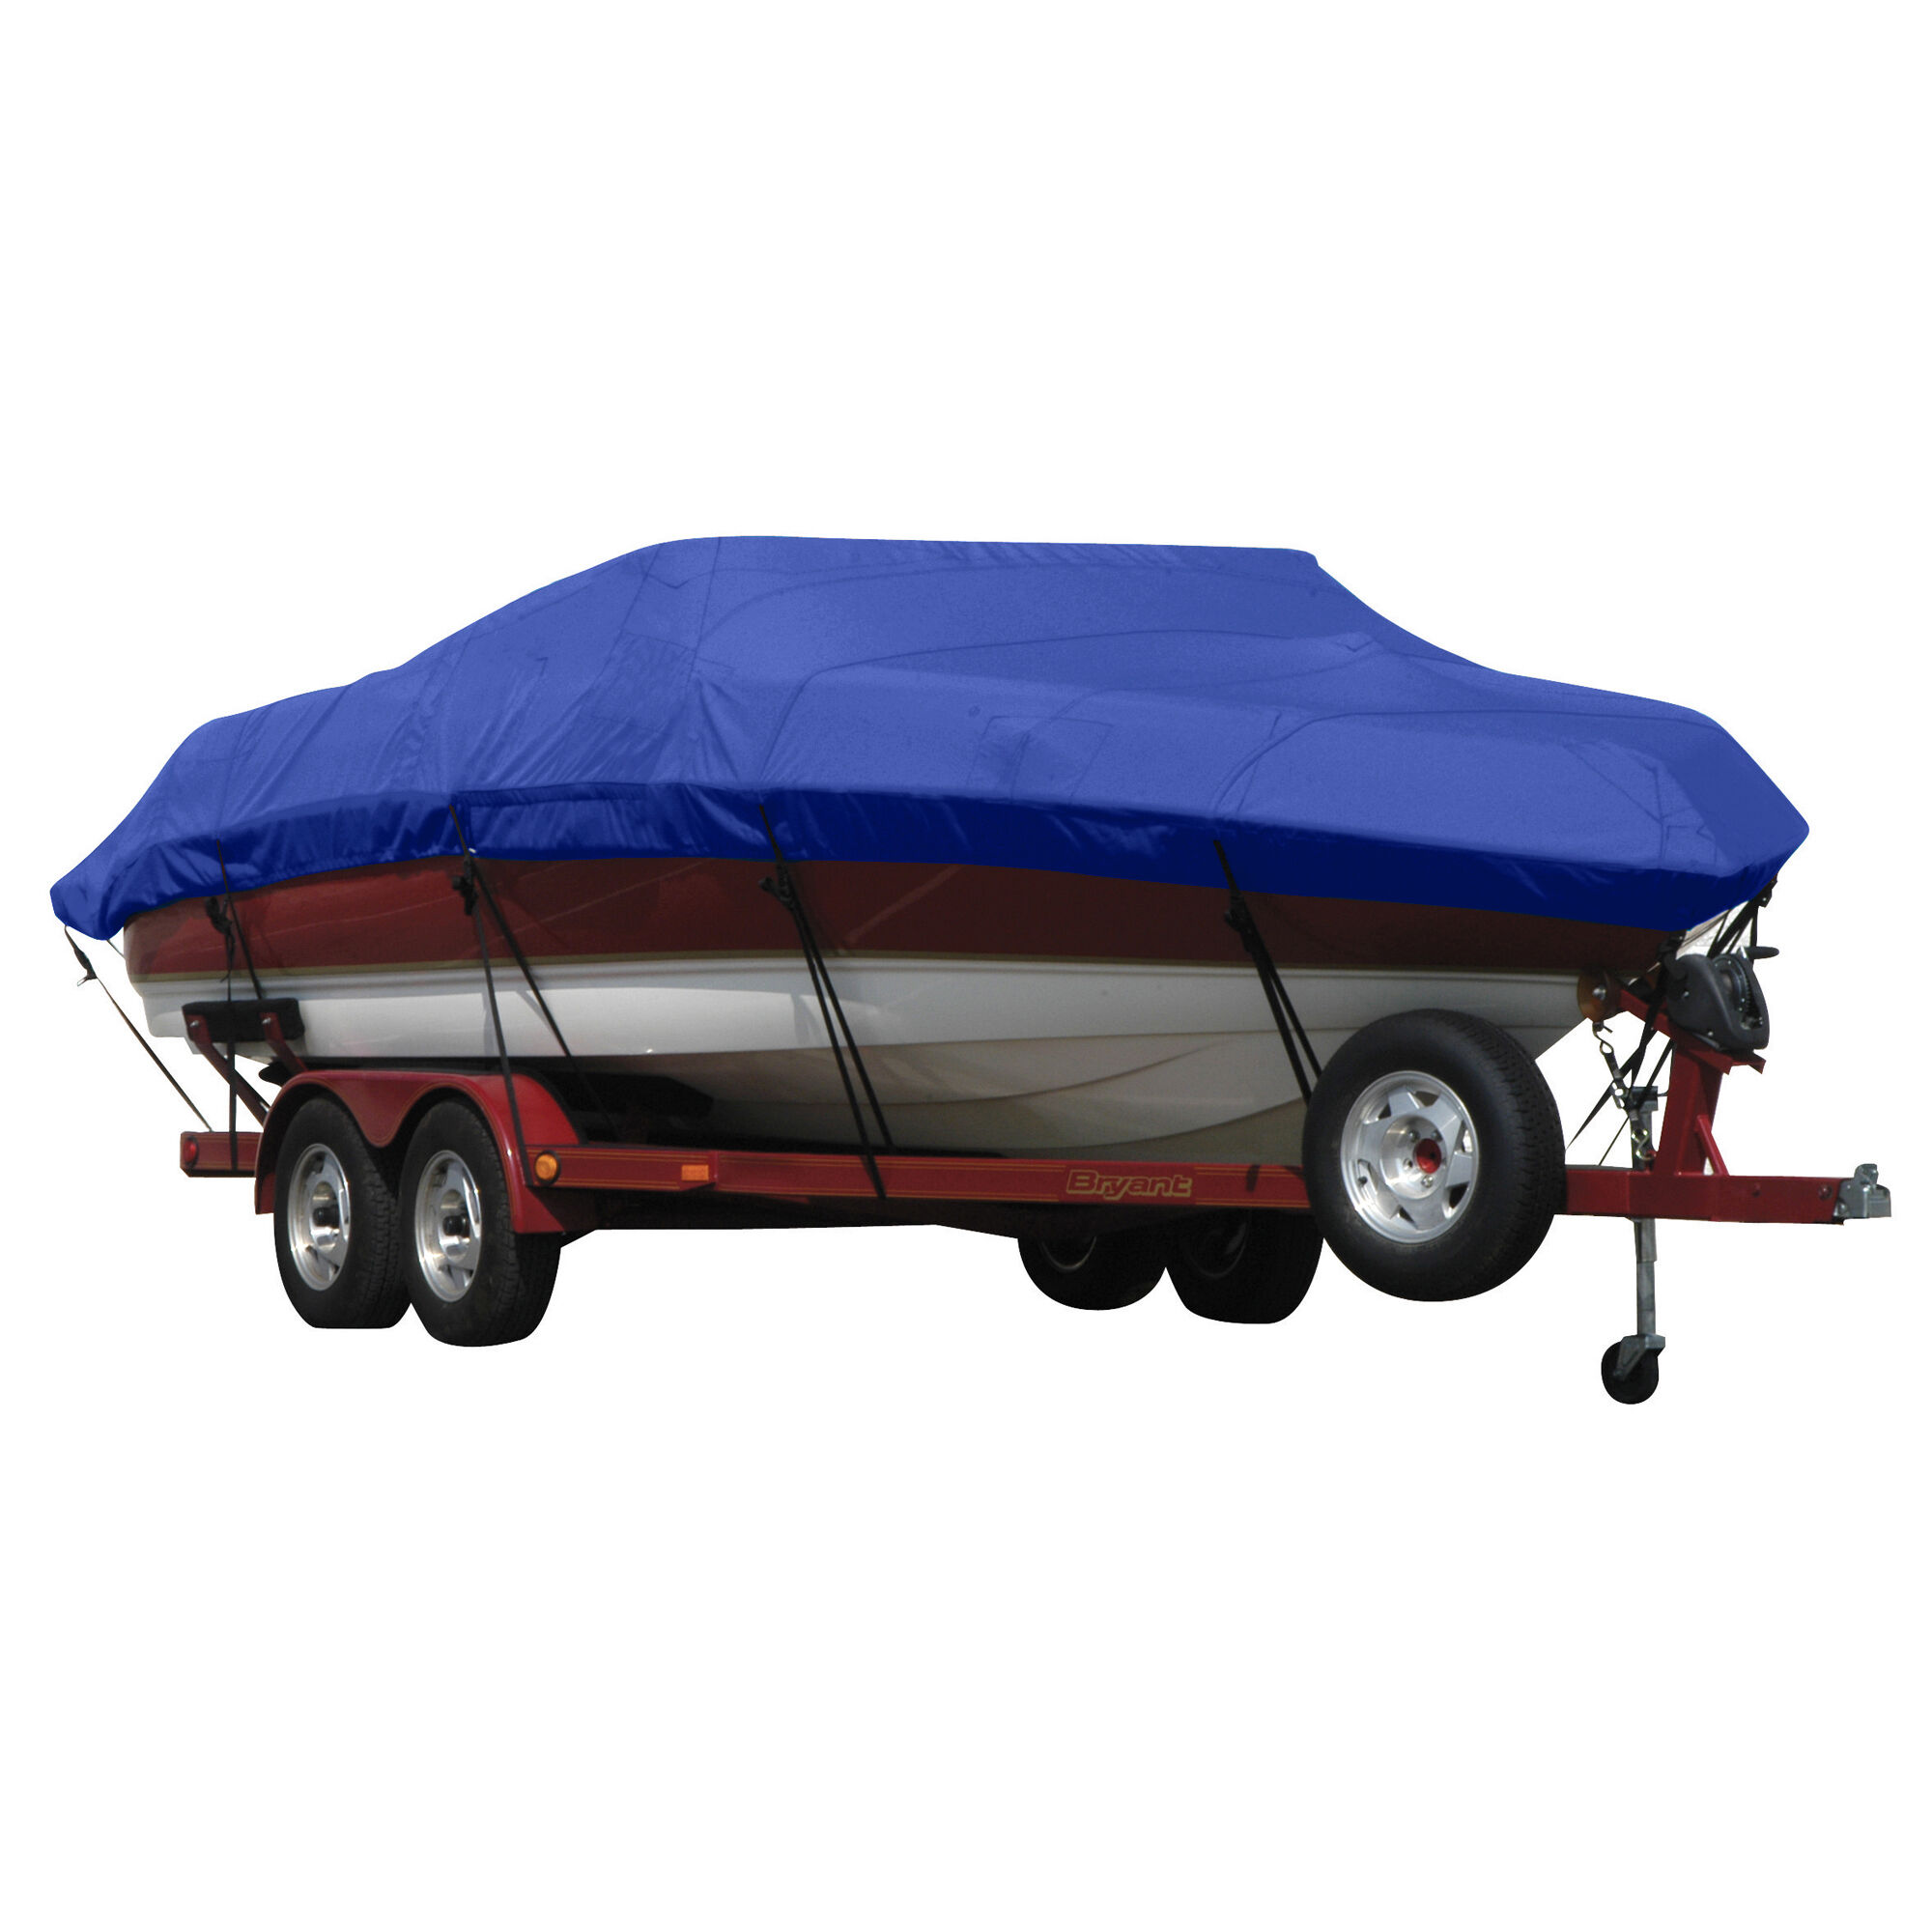 Covermate Exact Fit Sunbrella Boat Cover for Seaswirl Striper 2120 Striper 2120 Cuddy Hard Top No Pulpit I/O. Ocean Blue